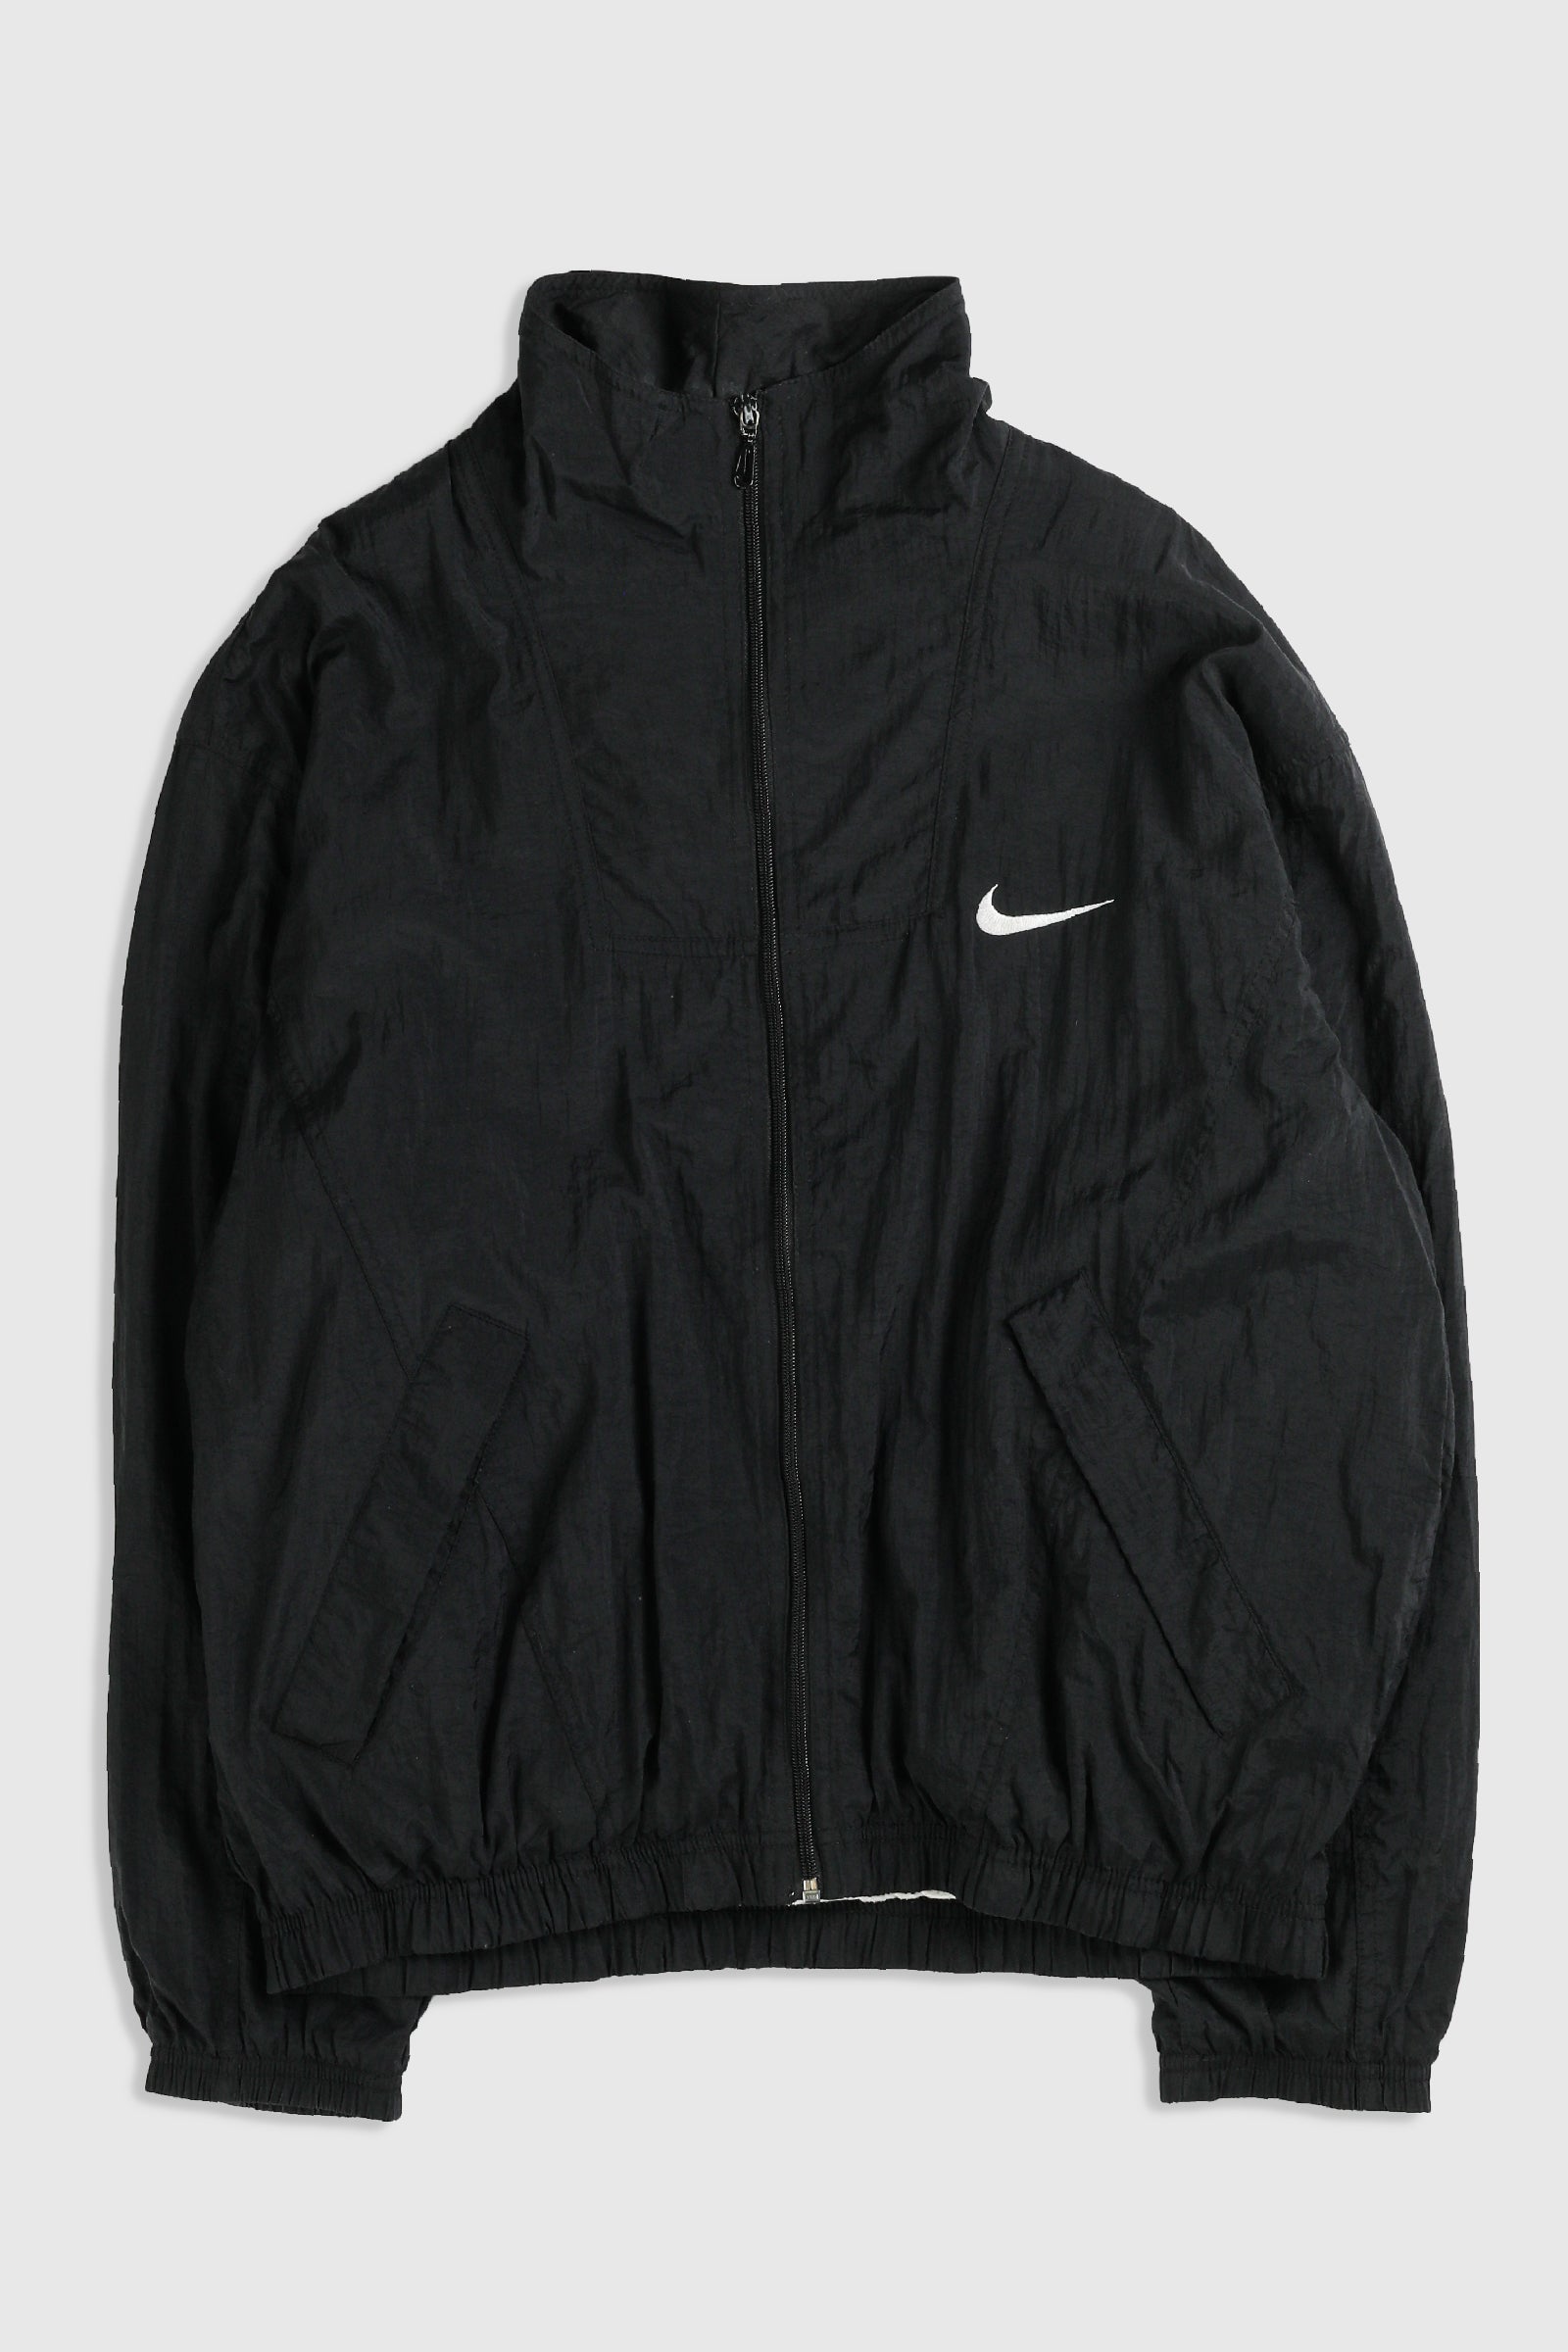 Vintage 90s Nike Bomber Jacket with Hood, Sport Jacket